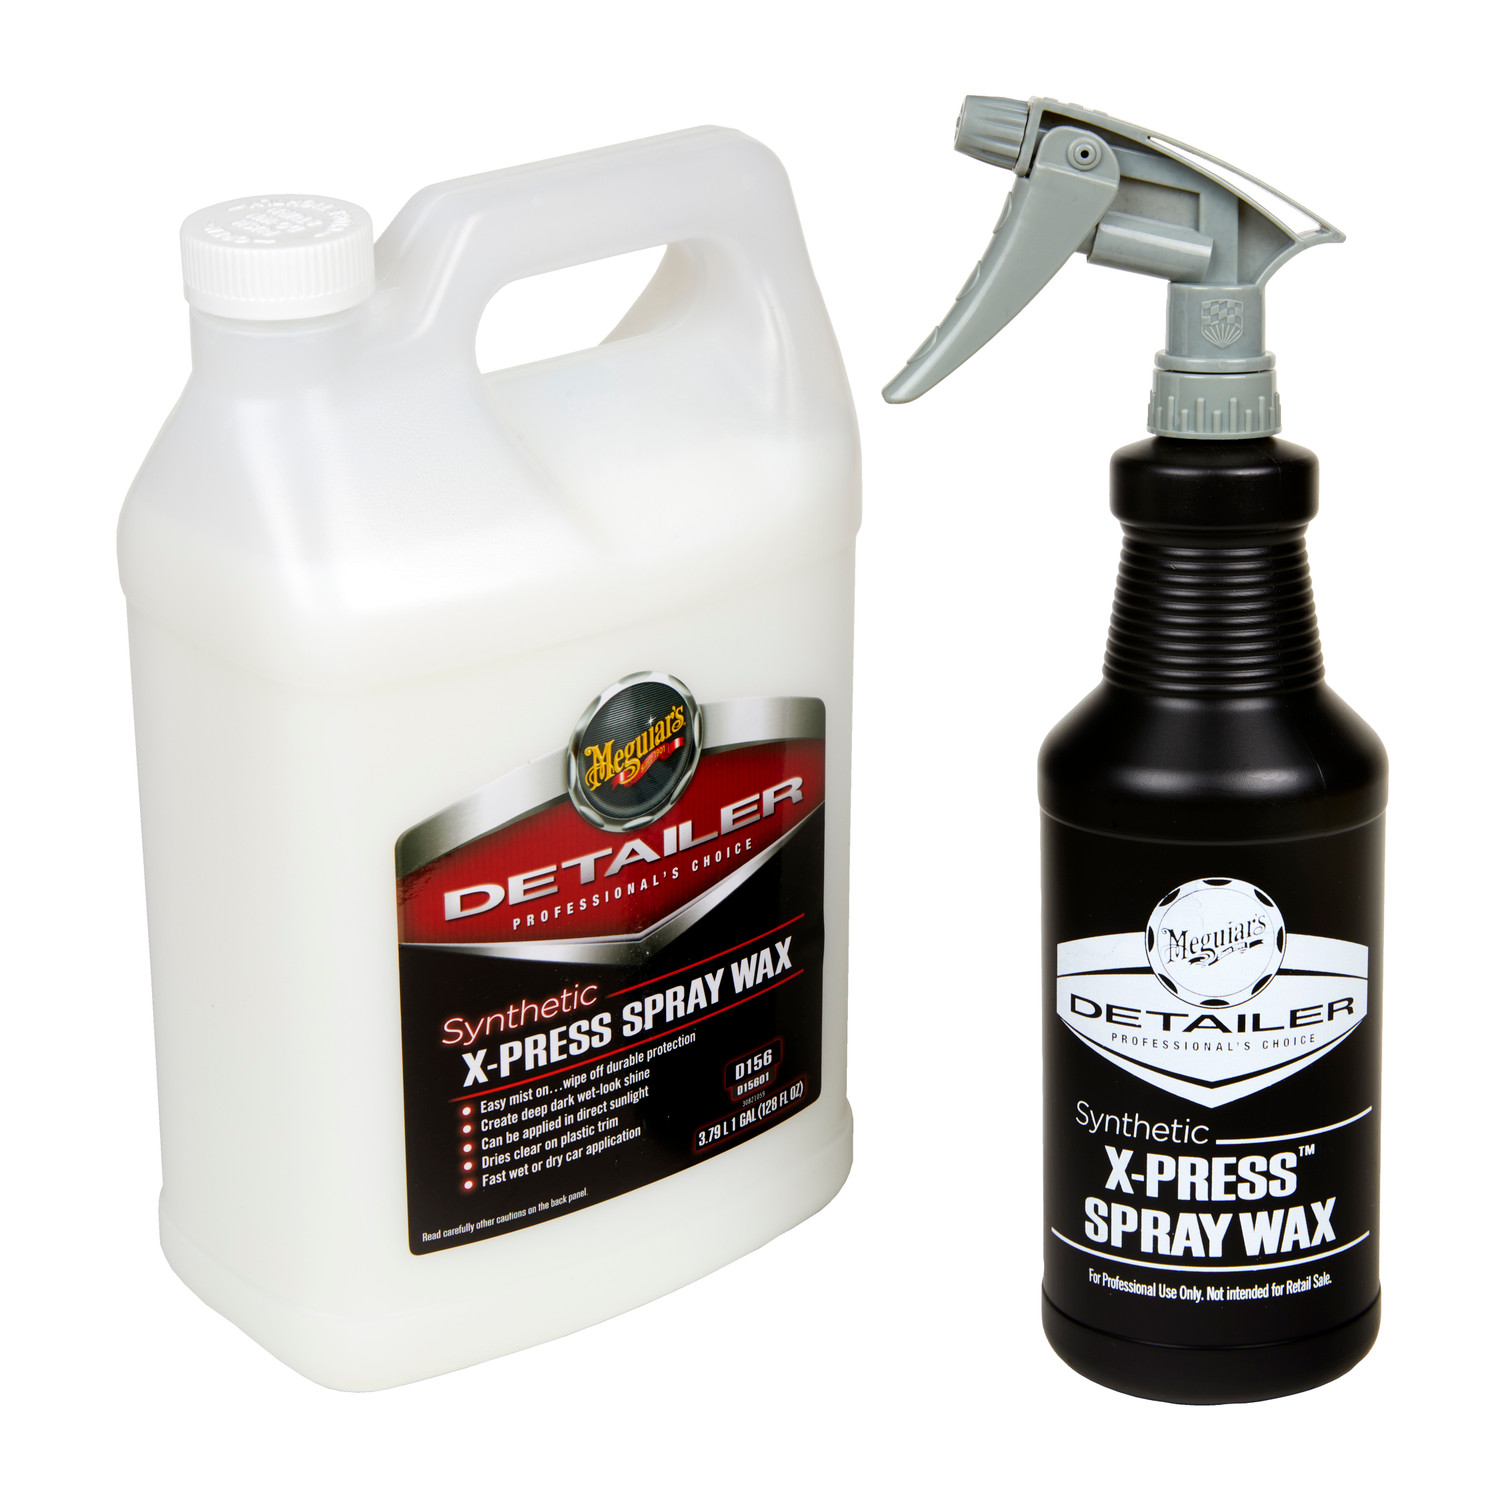 Meguiars D156 Synthetic X-press Spray Wax Kit | 1 Gallon and Spray Bottle